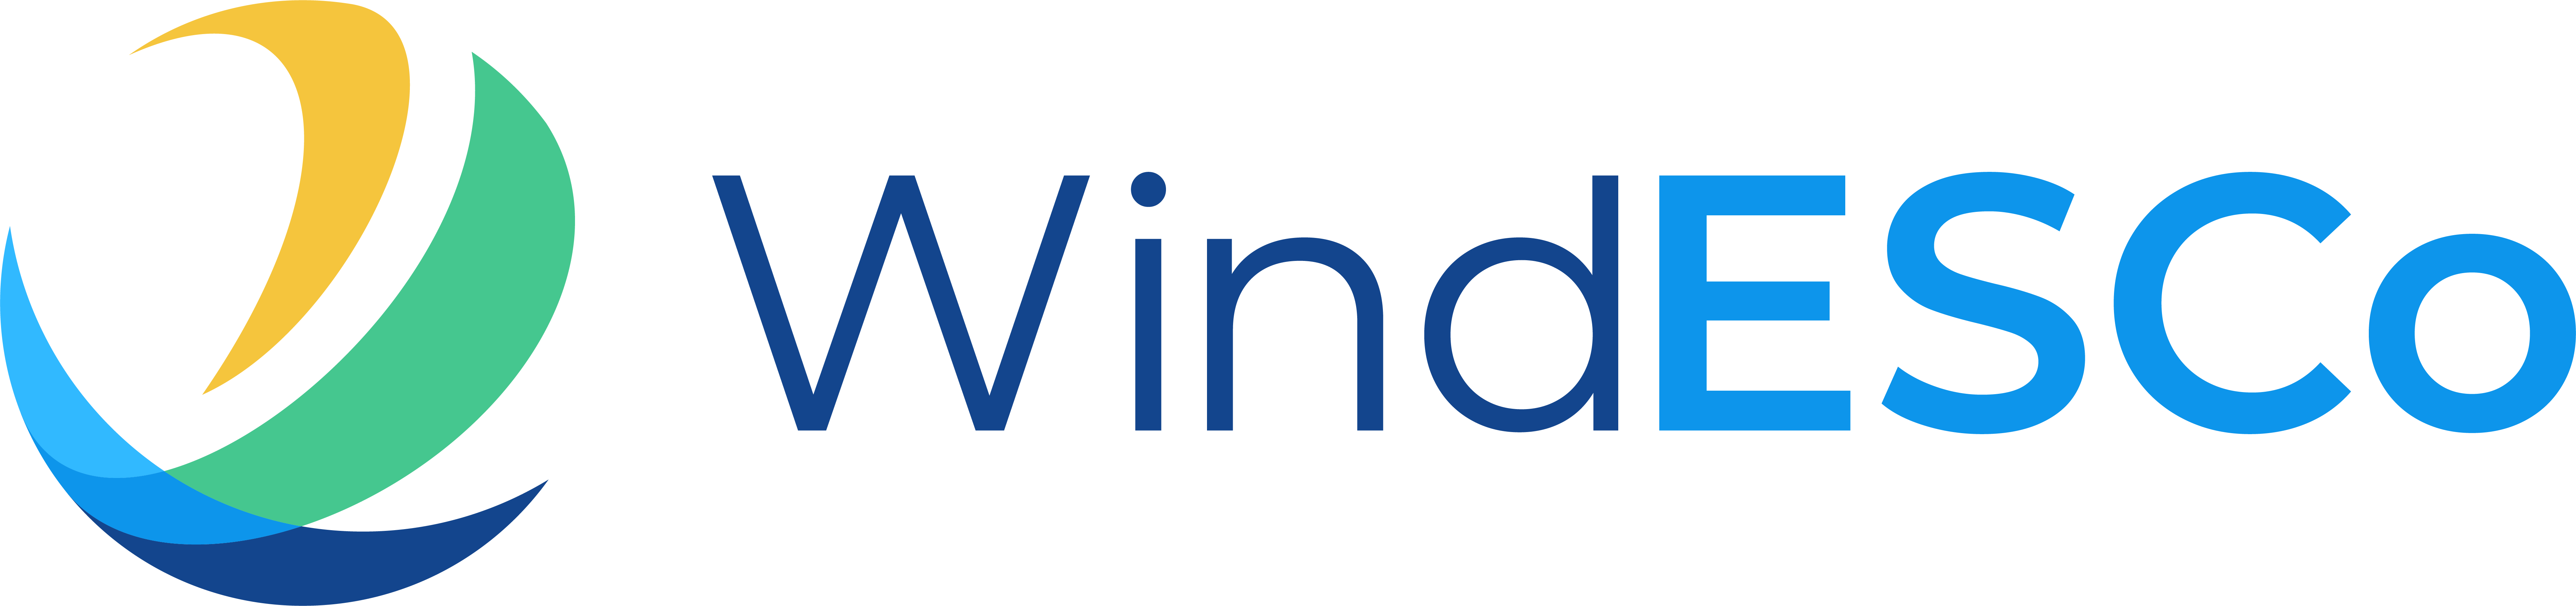 WindESCo Horizontal Logo-01-1